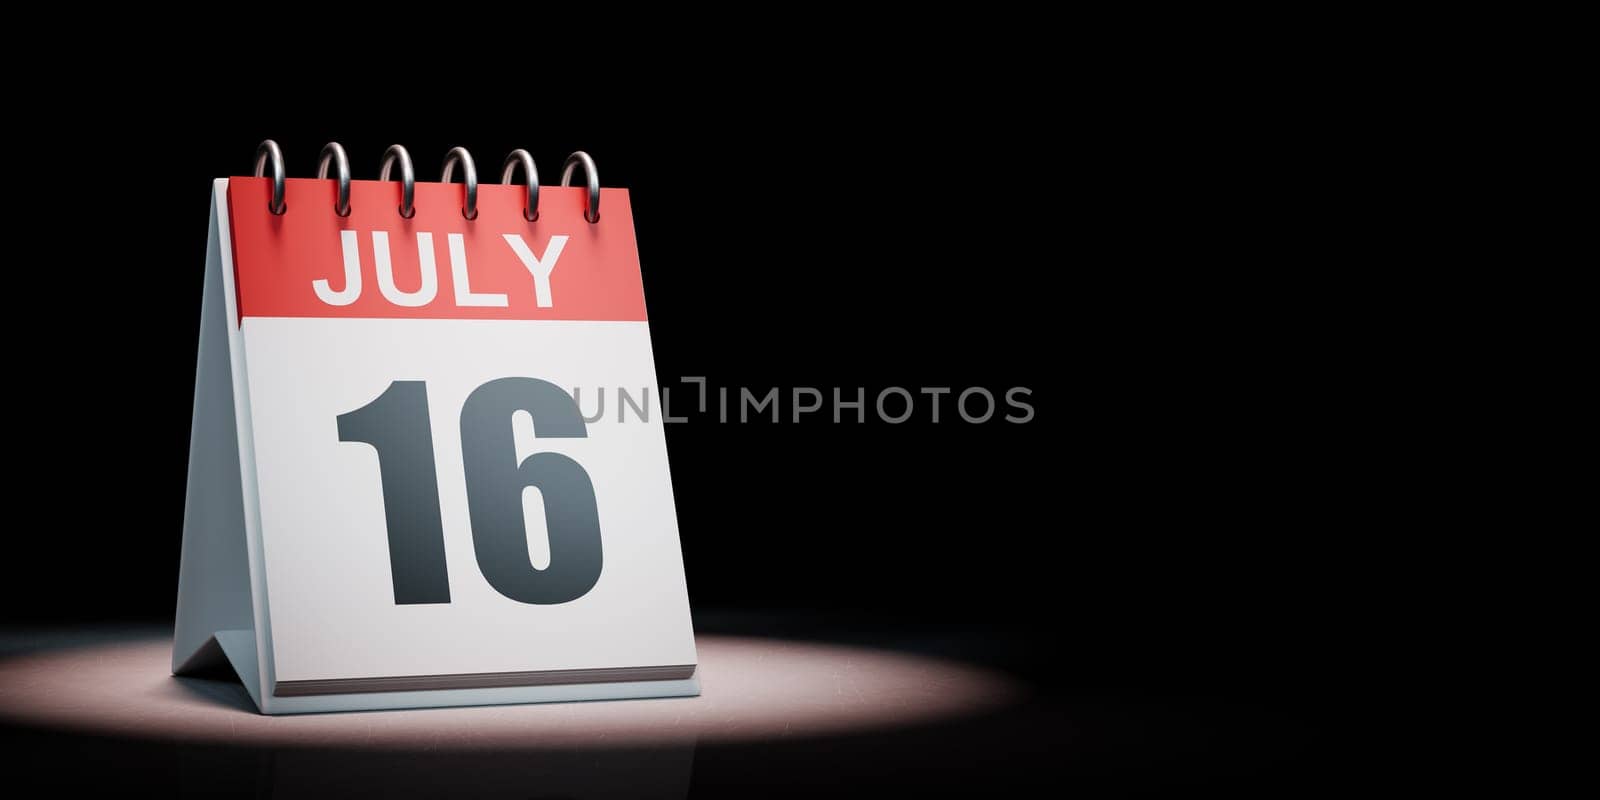 July 16 Calendar Spotlighted on Black Background by make